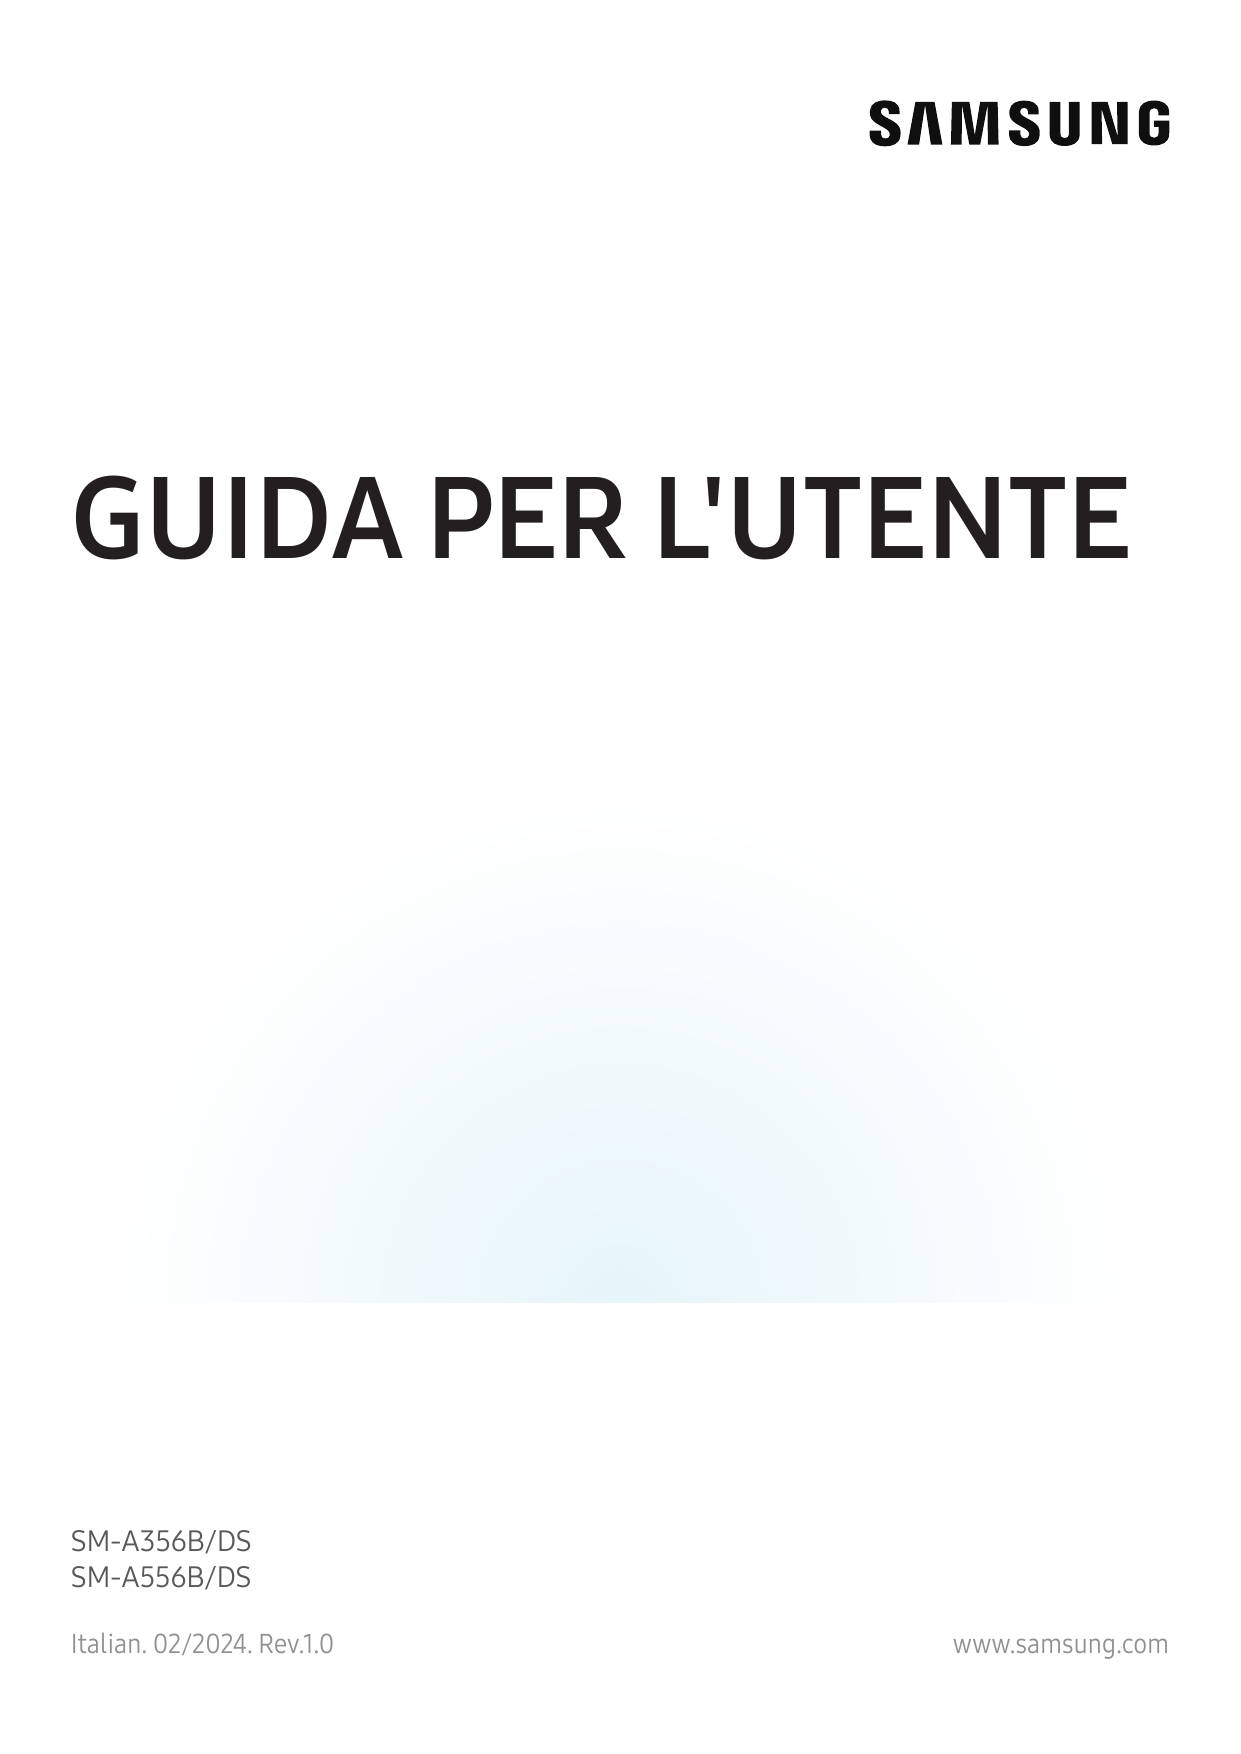 GUIDA PER L'UTENTESM-A356B/DSSM-A556B/DSItalian. 02/2024. Rev.1.0www.samsung.com